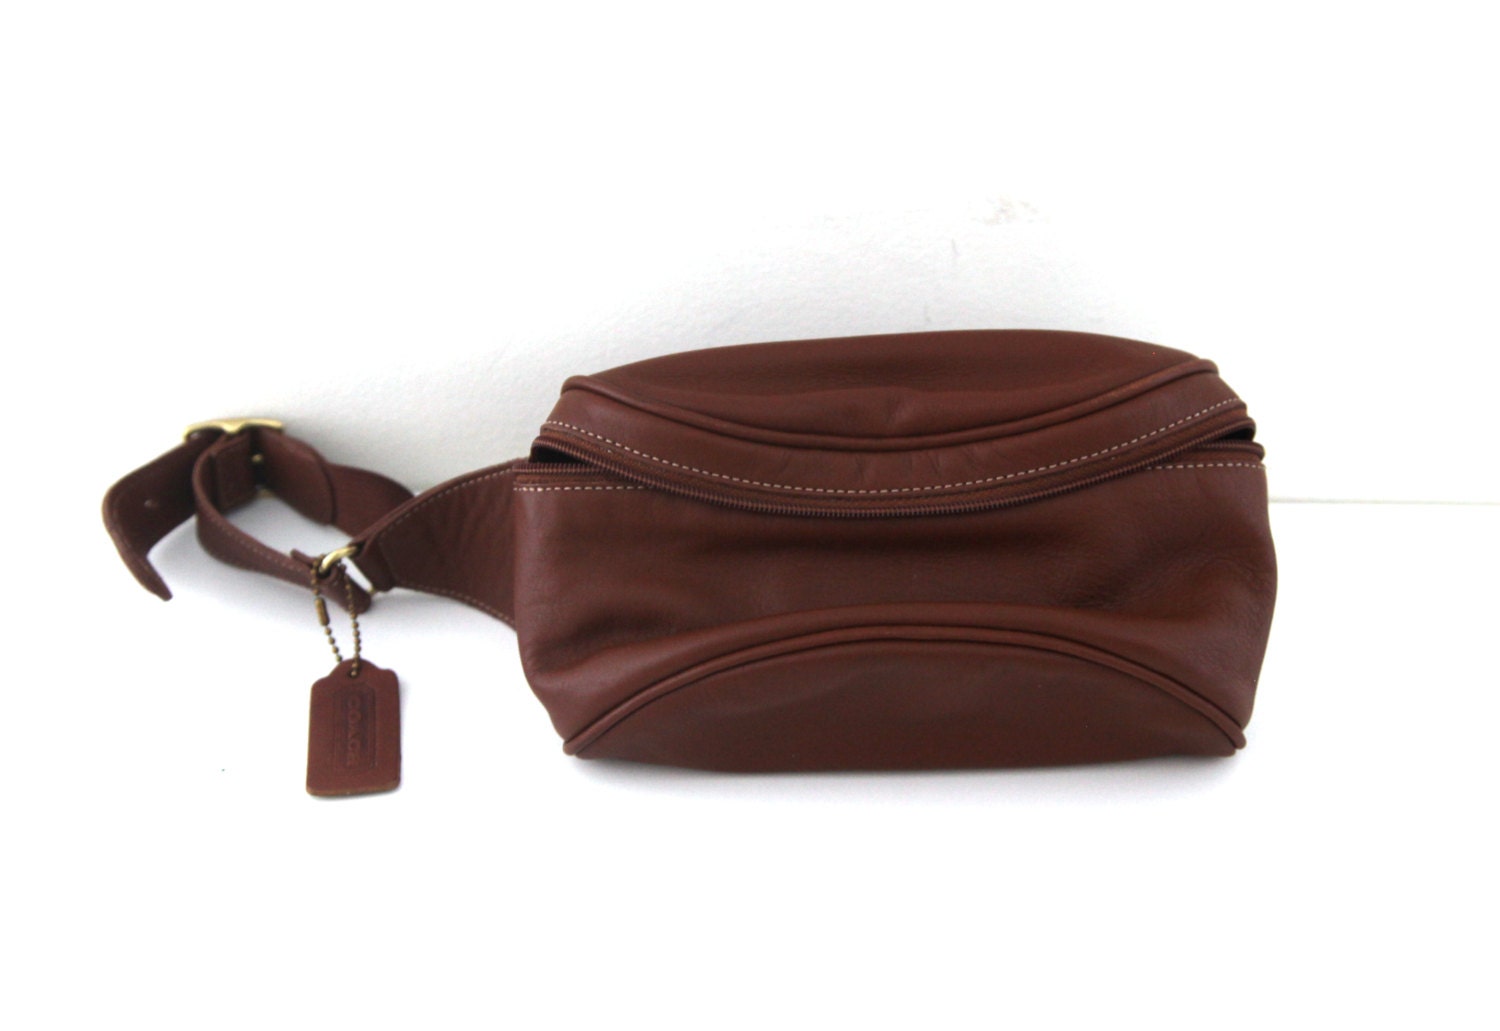 Vintage Coach fanny pack brown leather hip by 216vintageModern